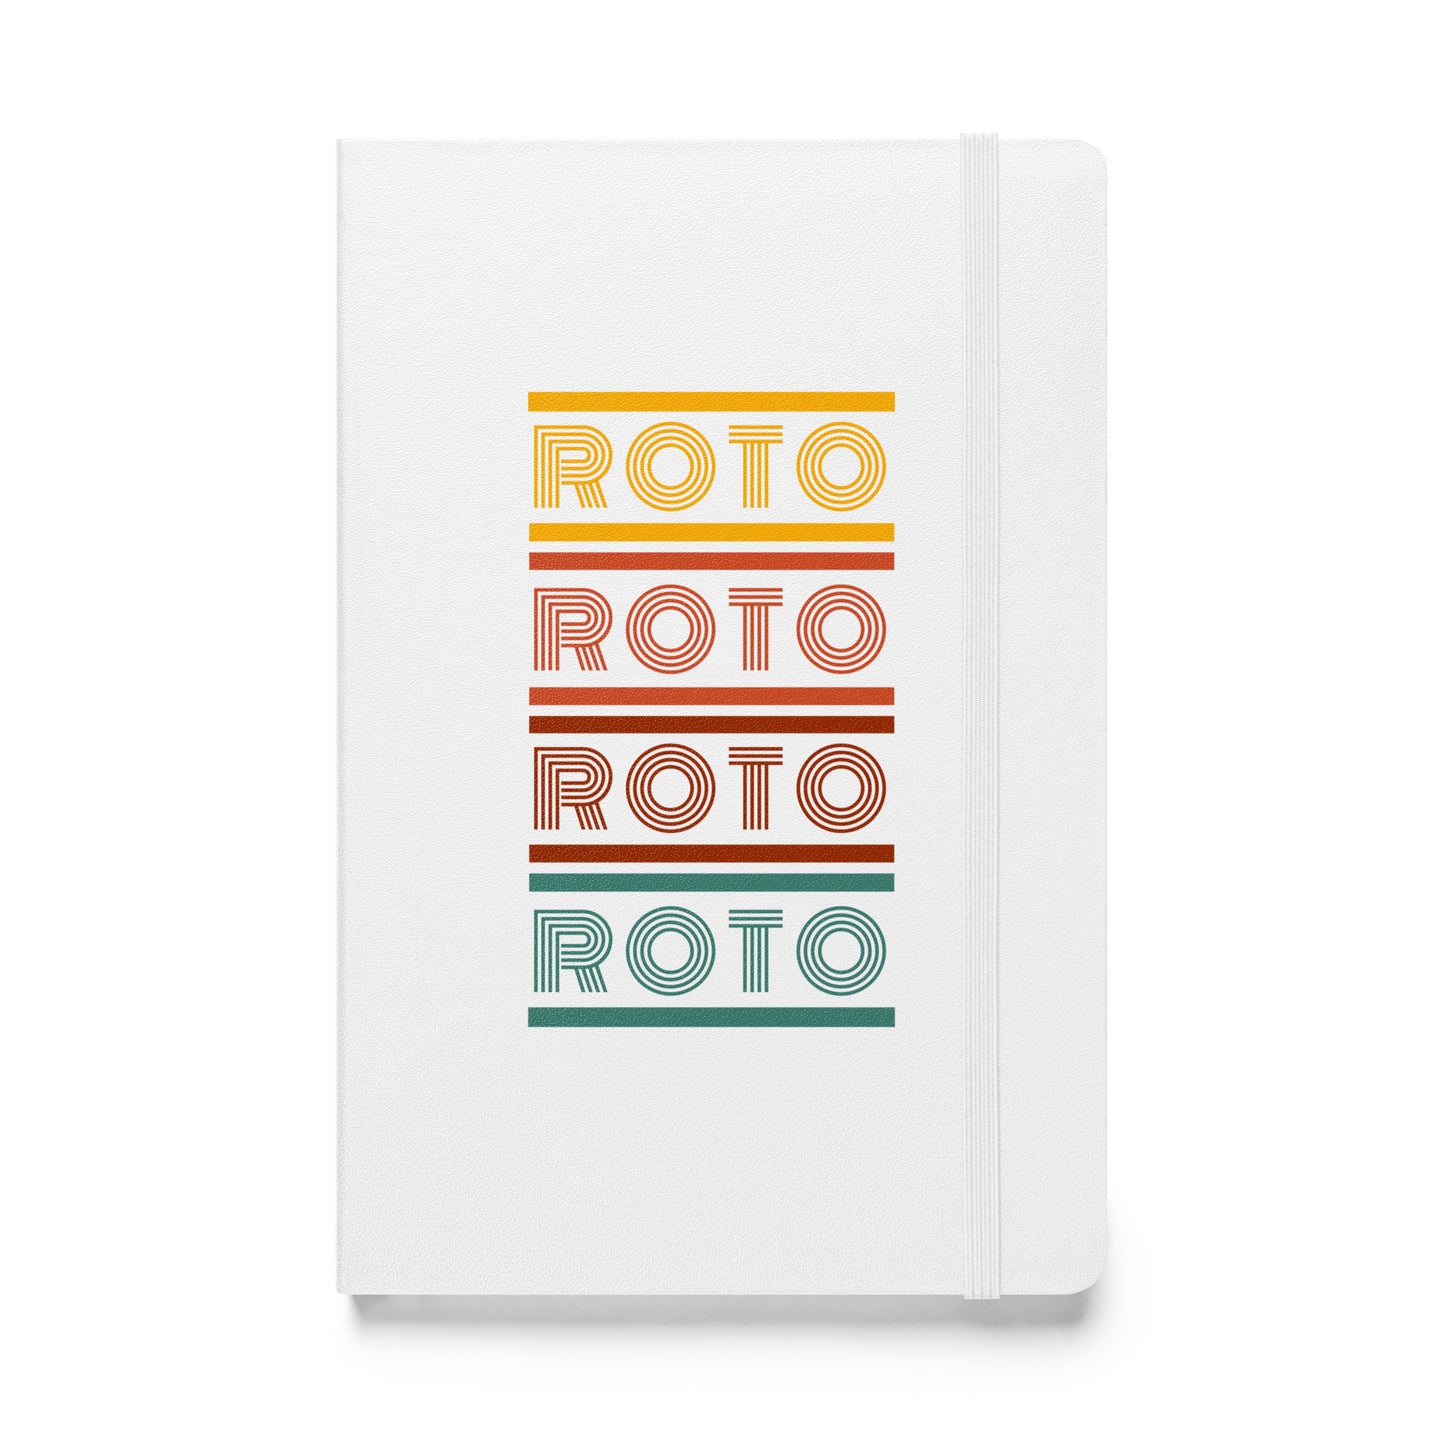 Hardcover bound notebook Roto Retro Series - CineQuips